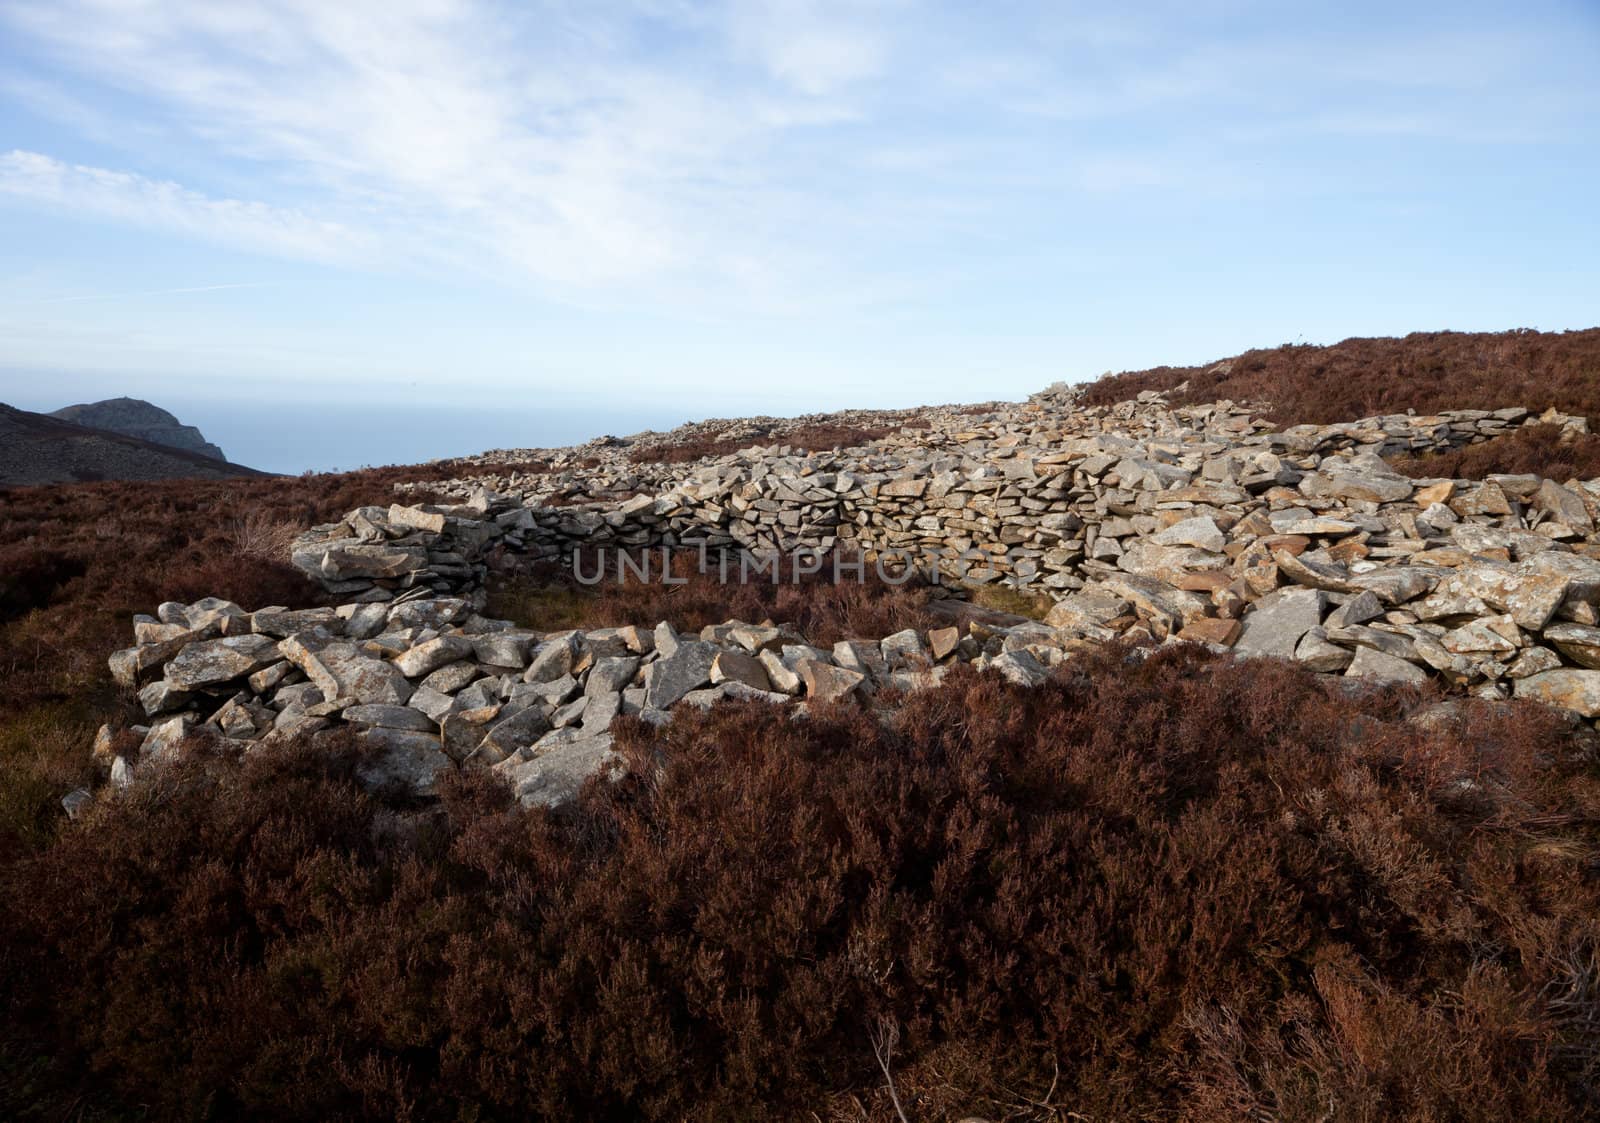 The remains of an iron age building at Tre'r Ceiri hill fort, Yr Eifl, Gwynedd Wales Uk, amongst heather on a hill.